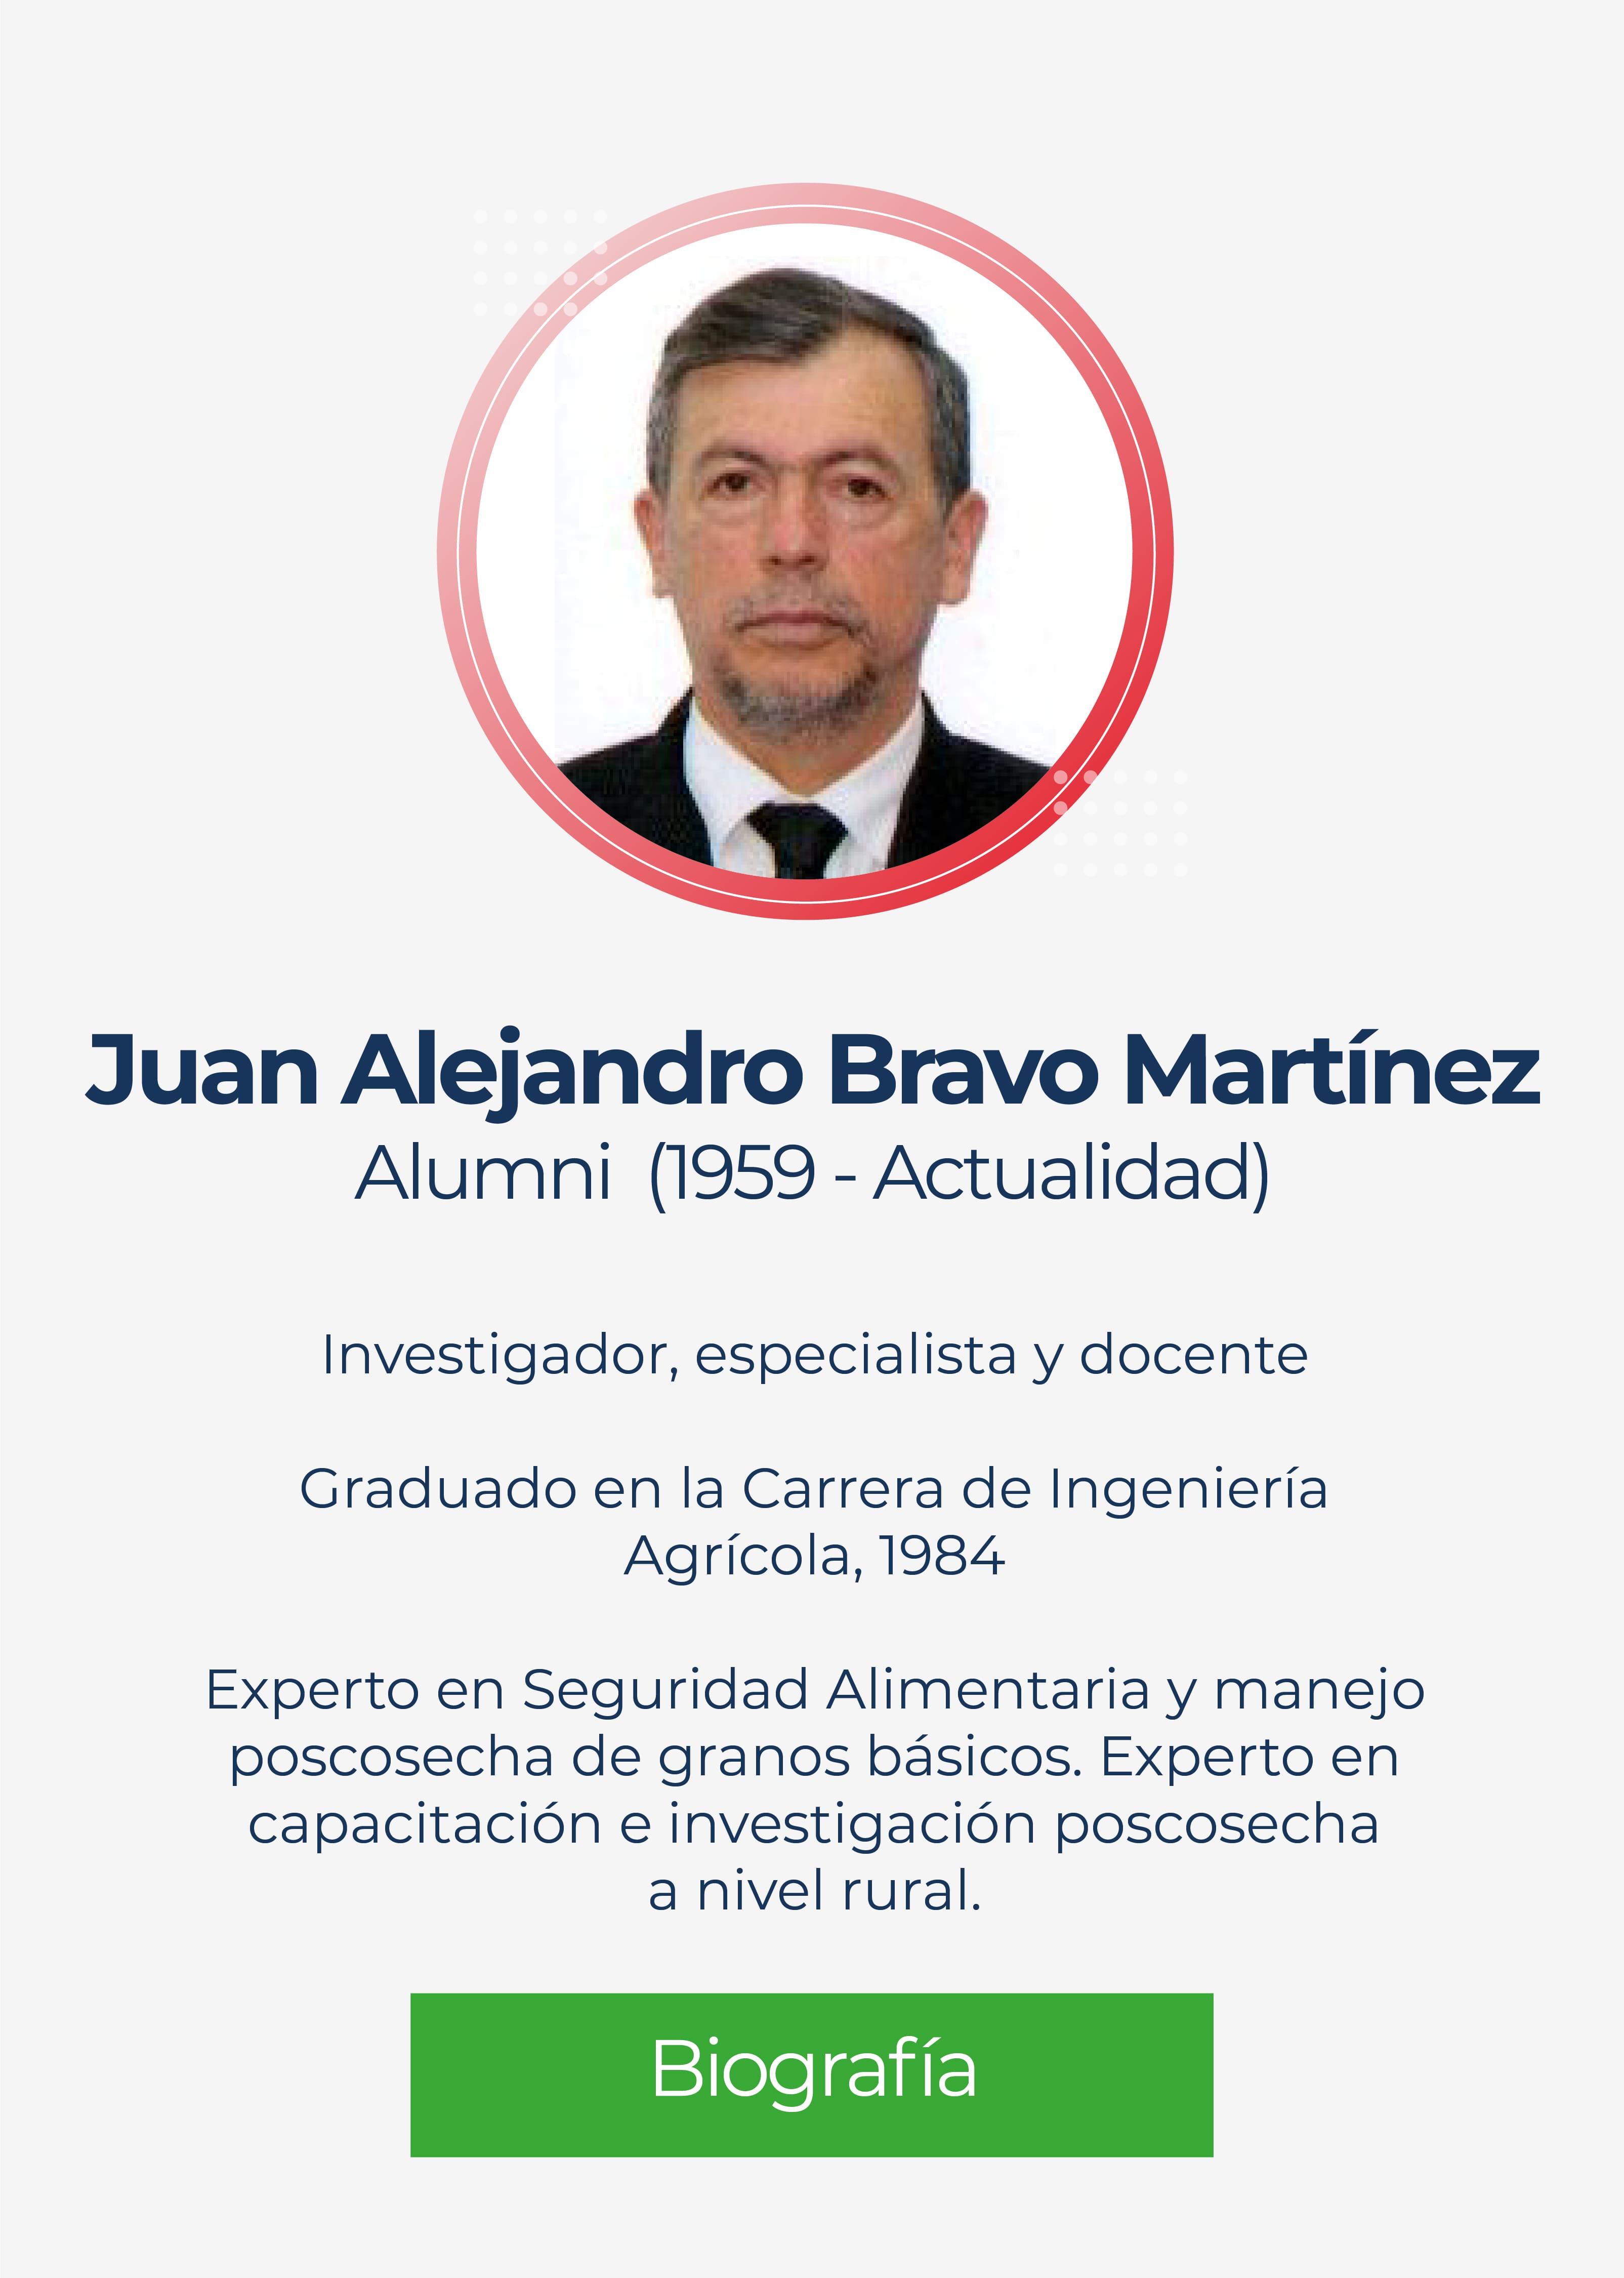 Juan Alejandro Bravo Martínez